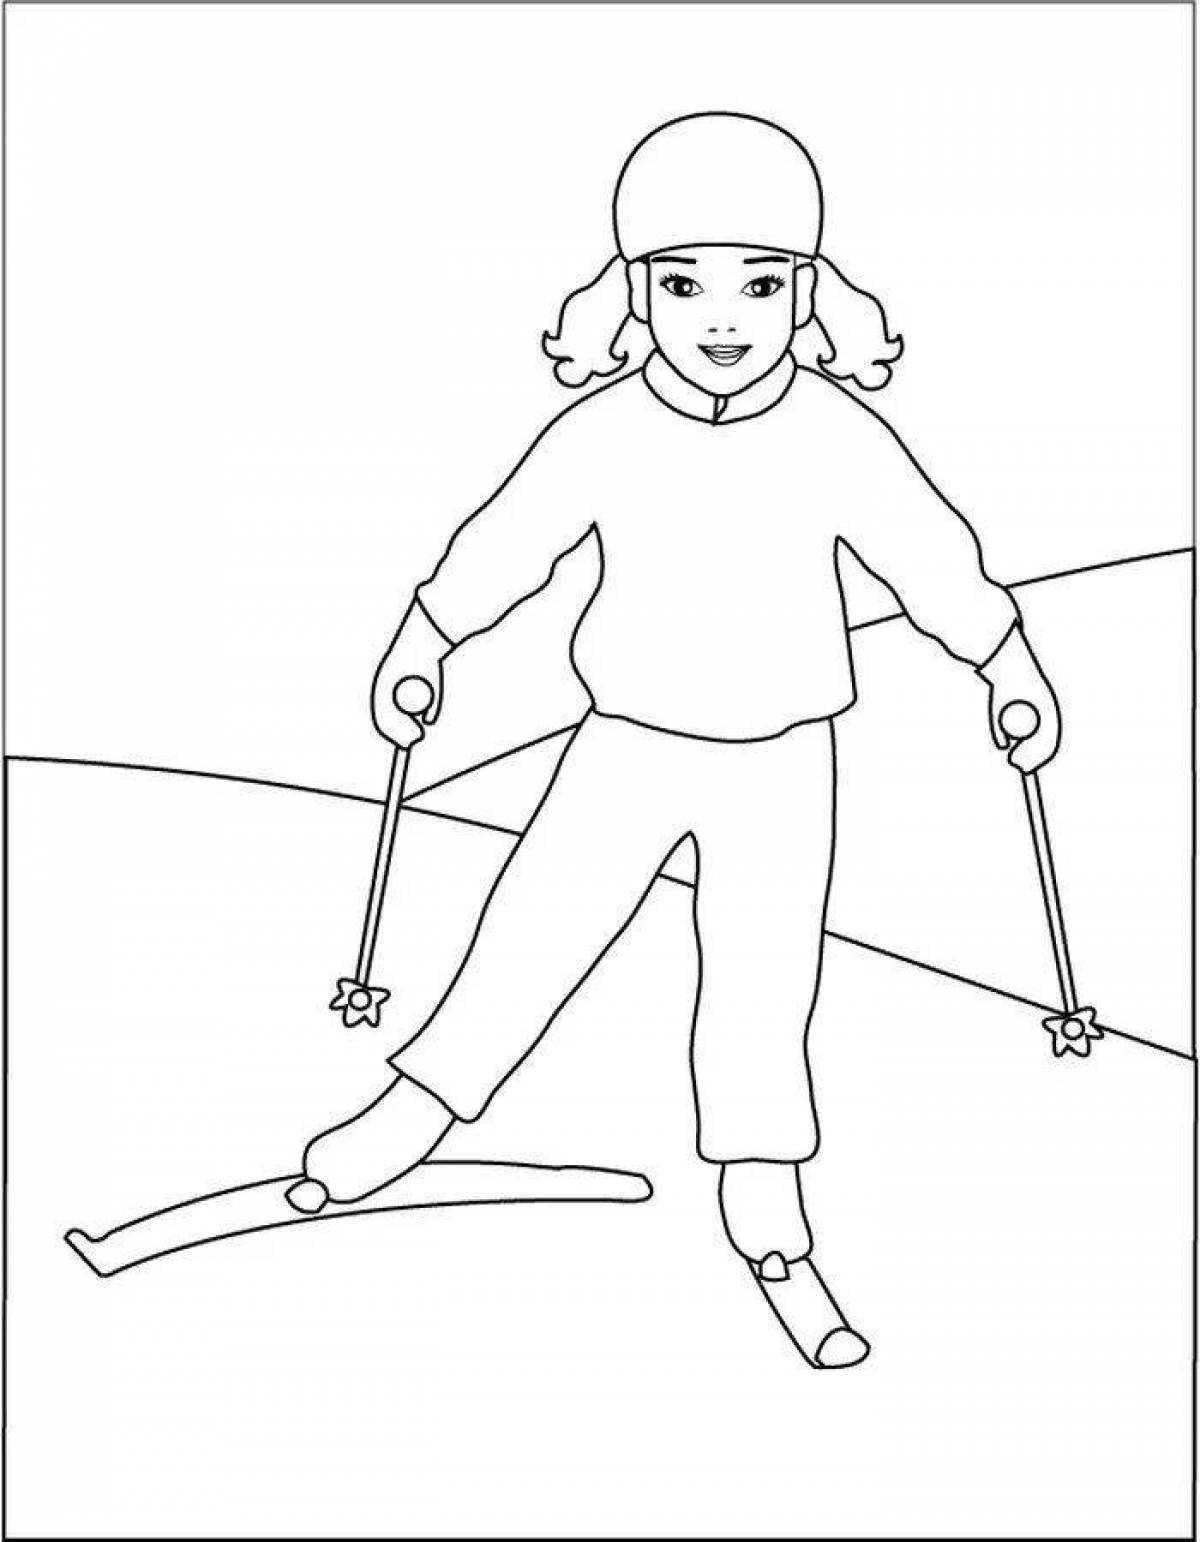 Coloring book magical skiing